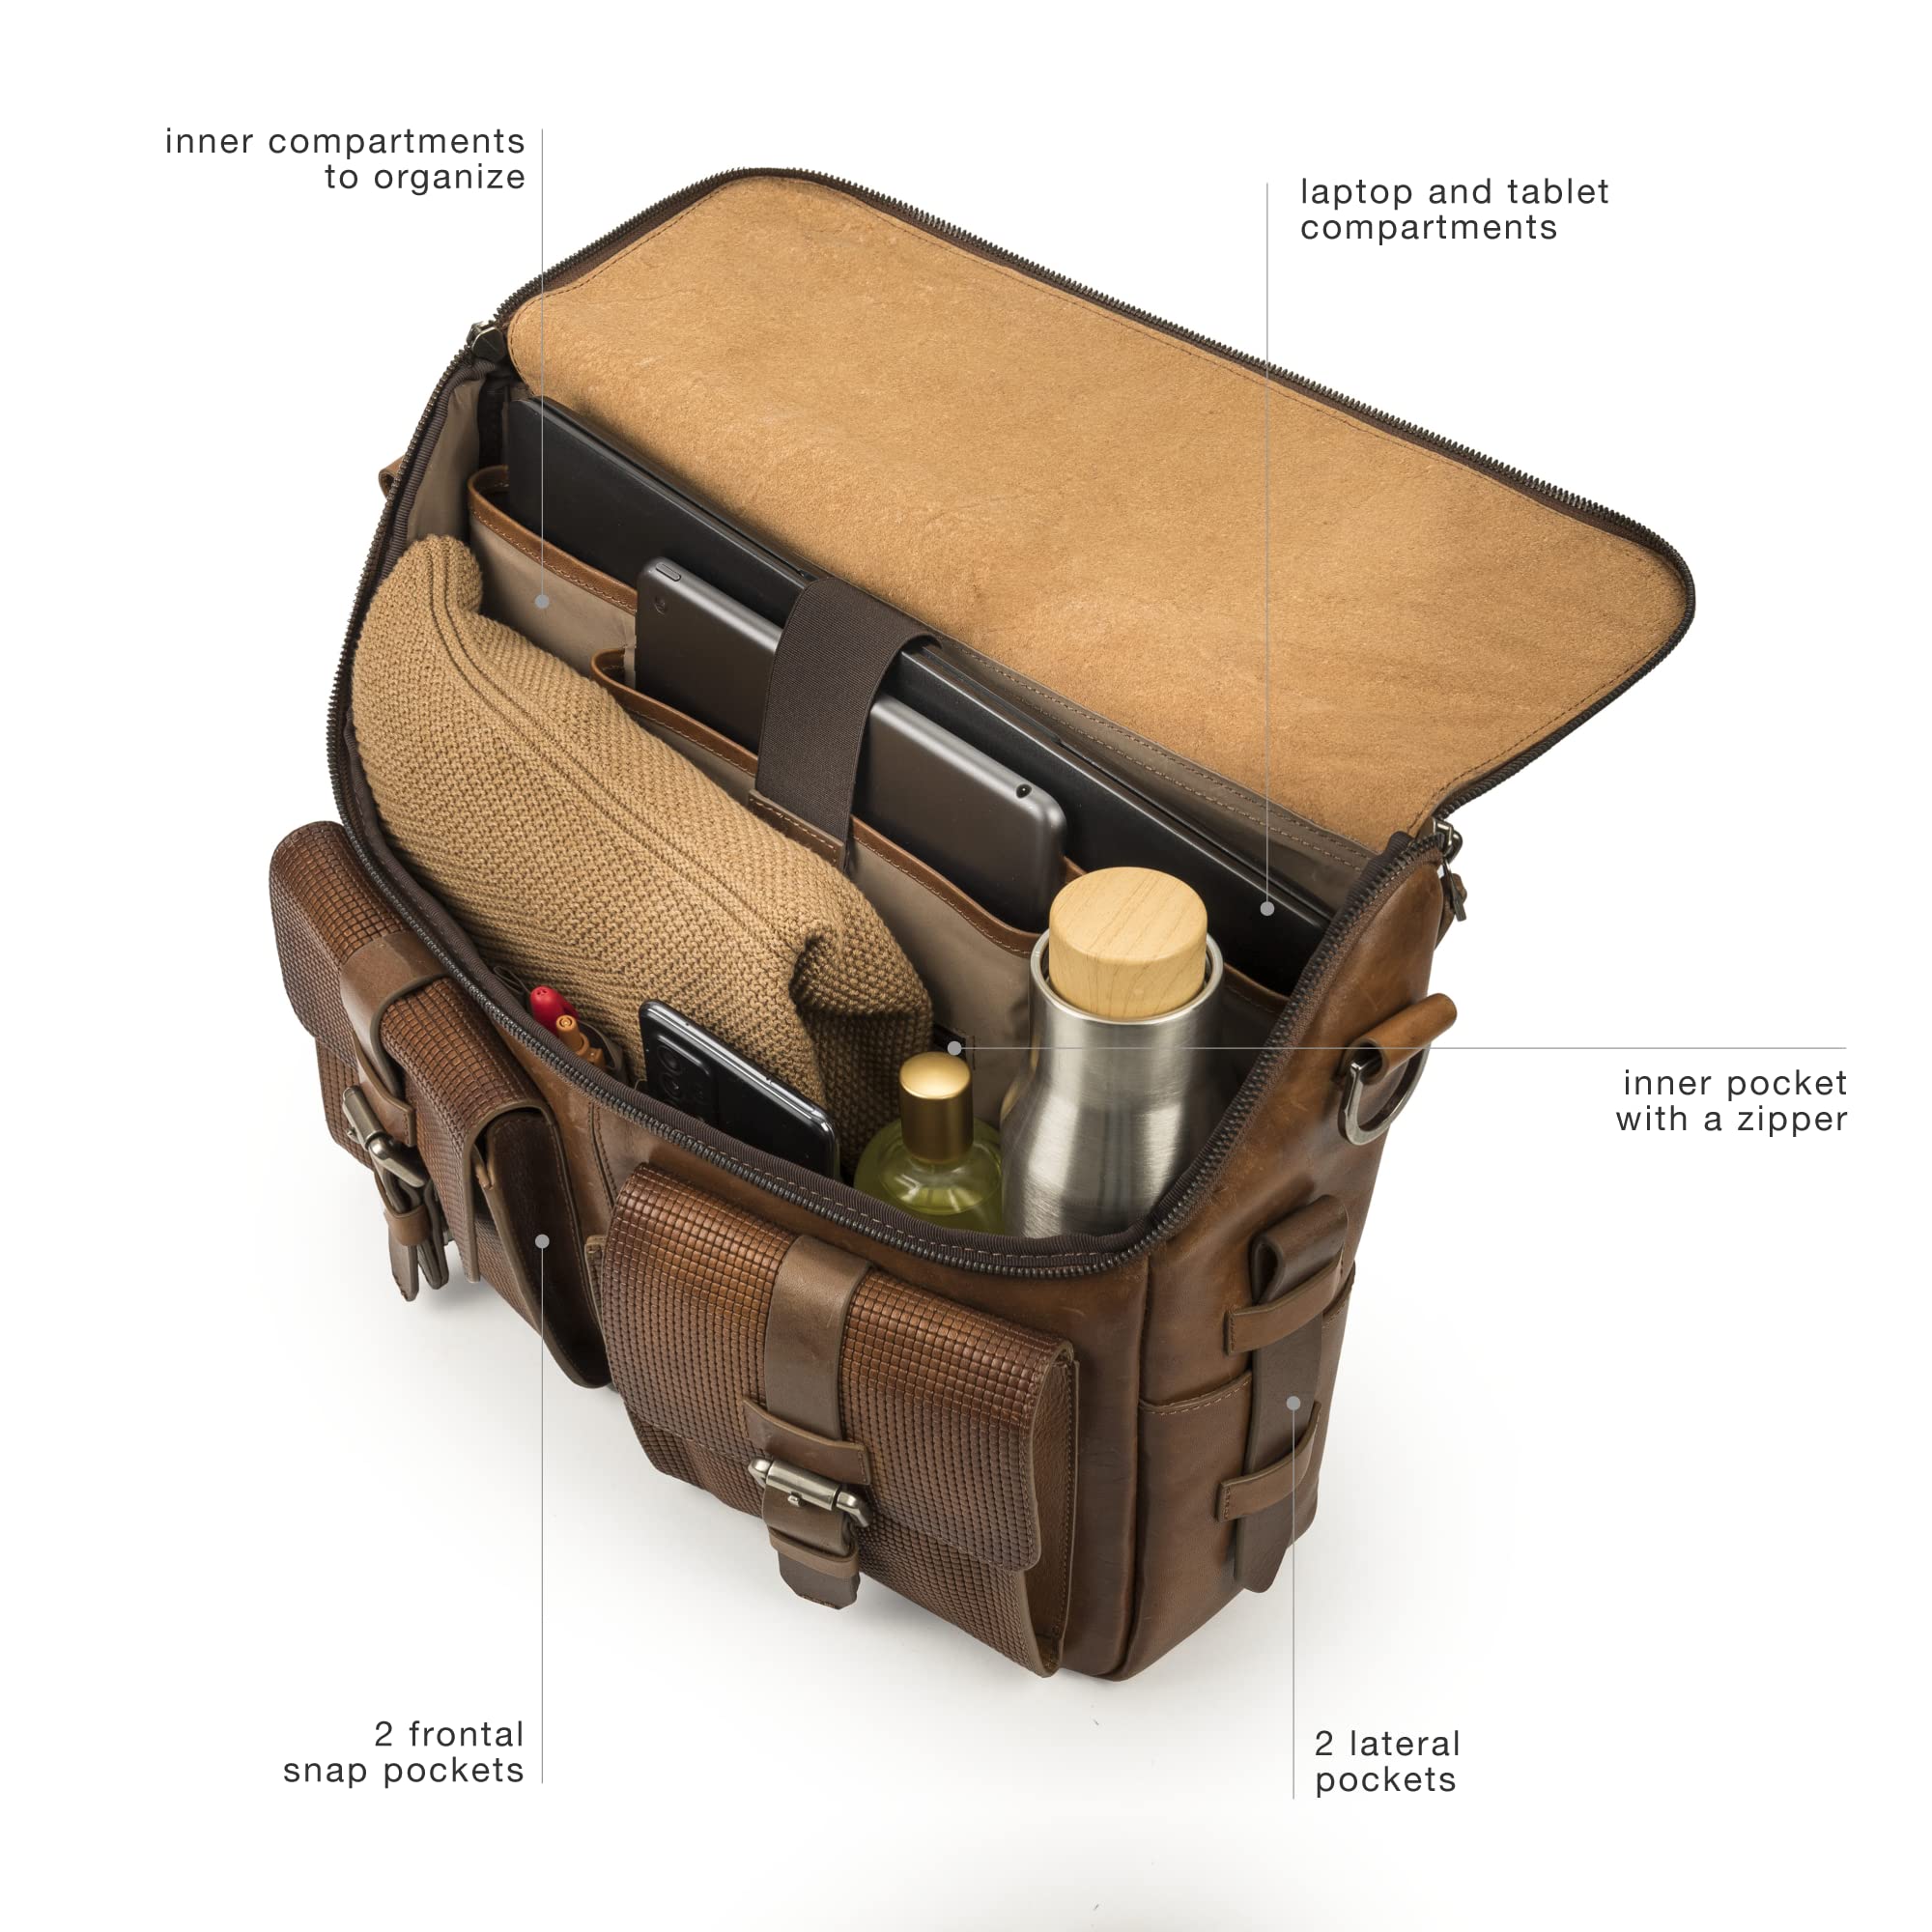 VELEZ 9 Brown Mens Business Casual Sneakers + Full Grain Leather Messenger Bag for Men Business Travel Briefcase Computer Laptop Bag